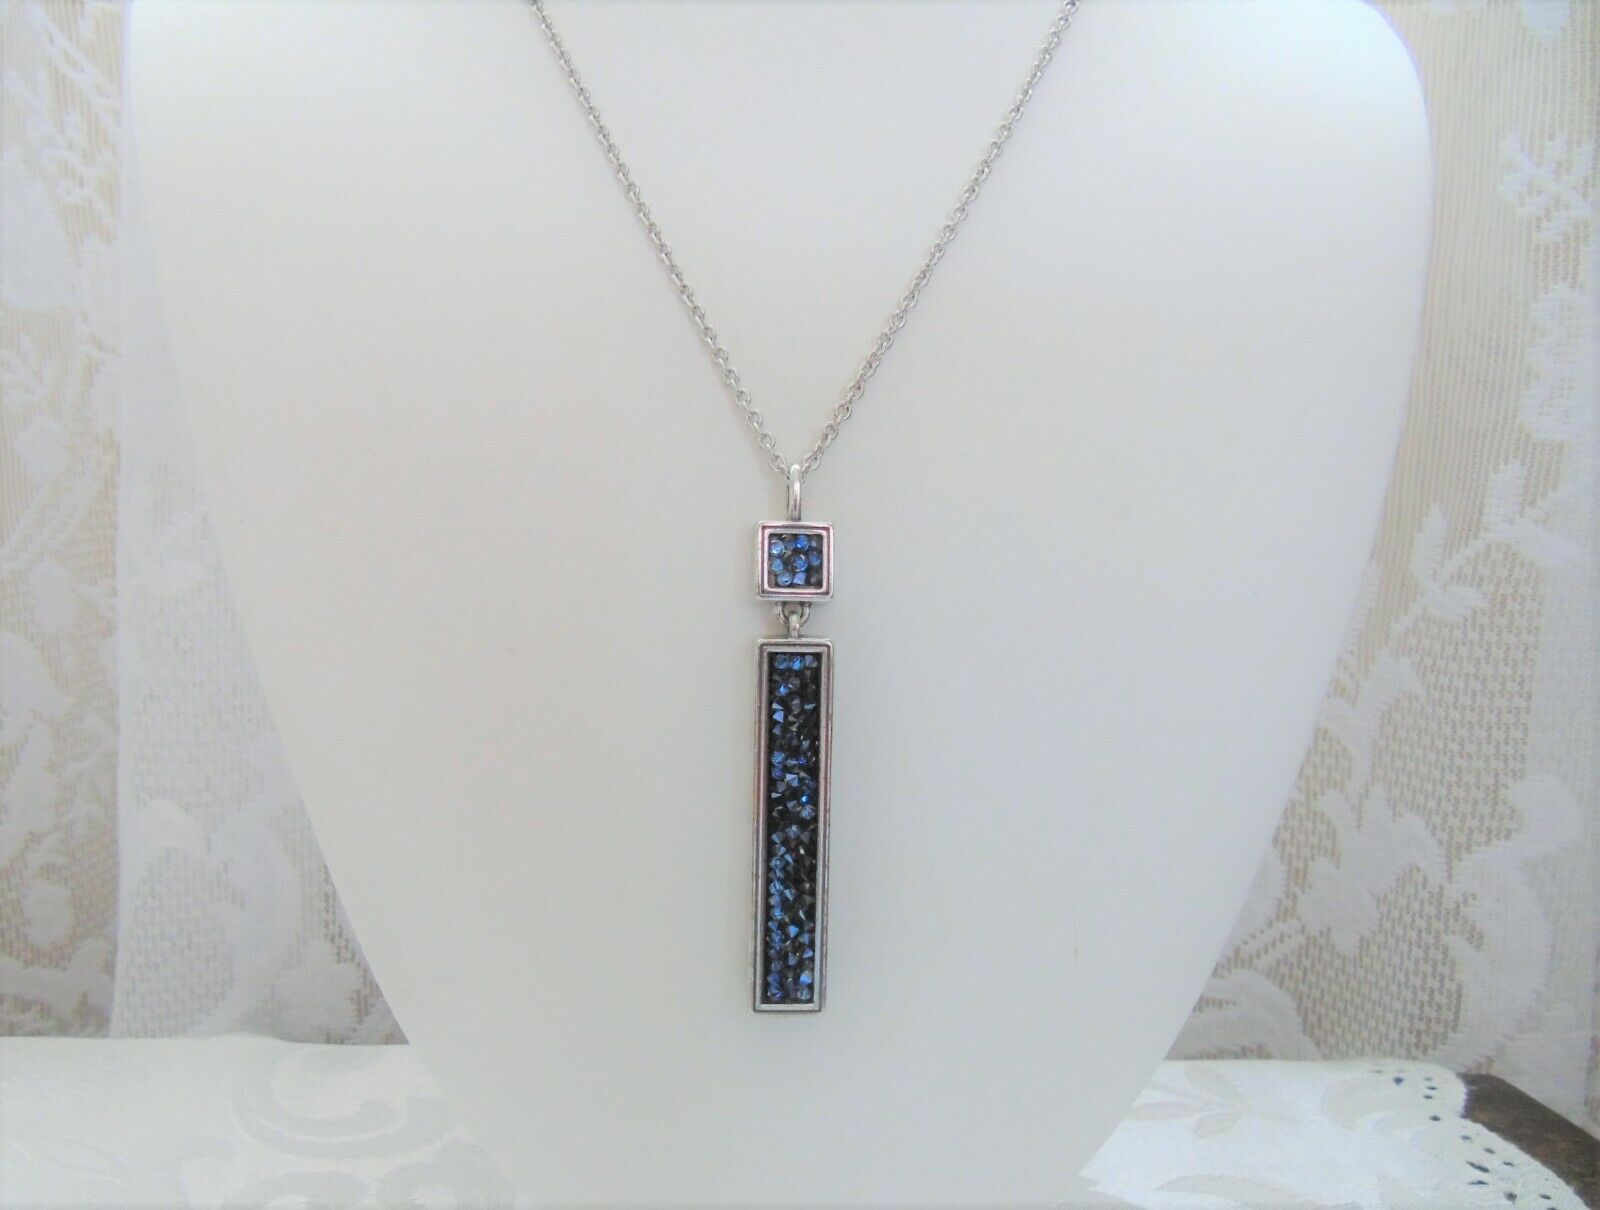 Unique Del Sol Pendant Necklace With Blue Inlaid Glass Chips